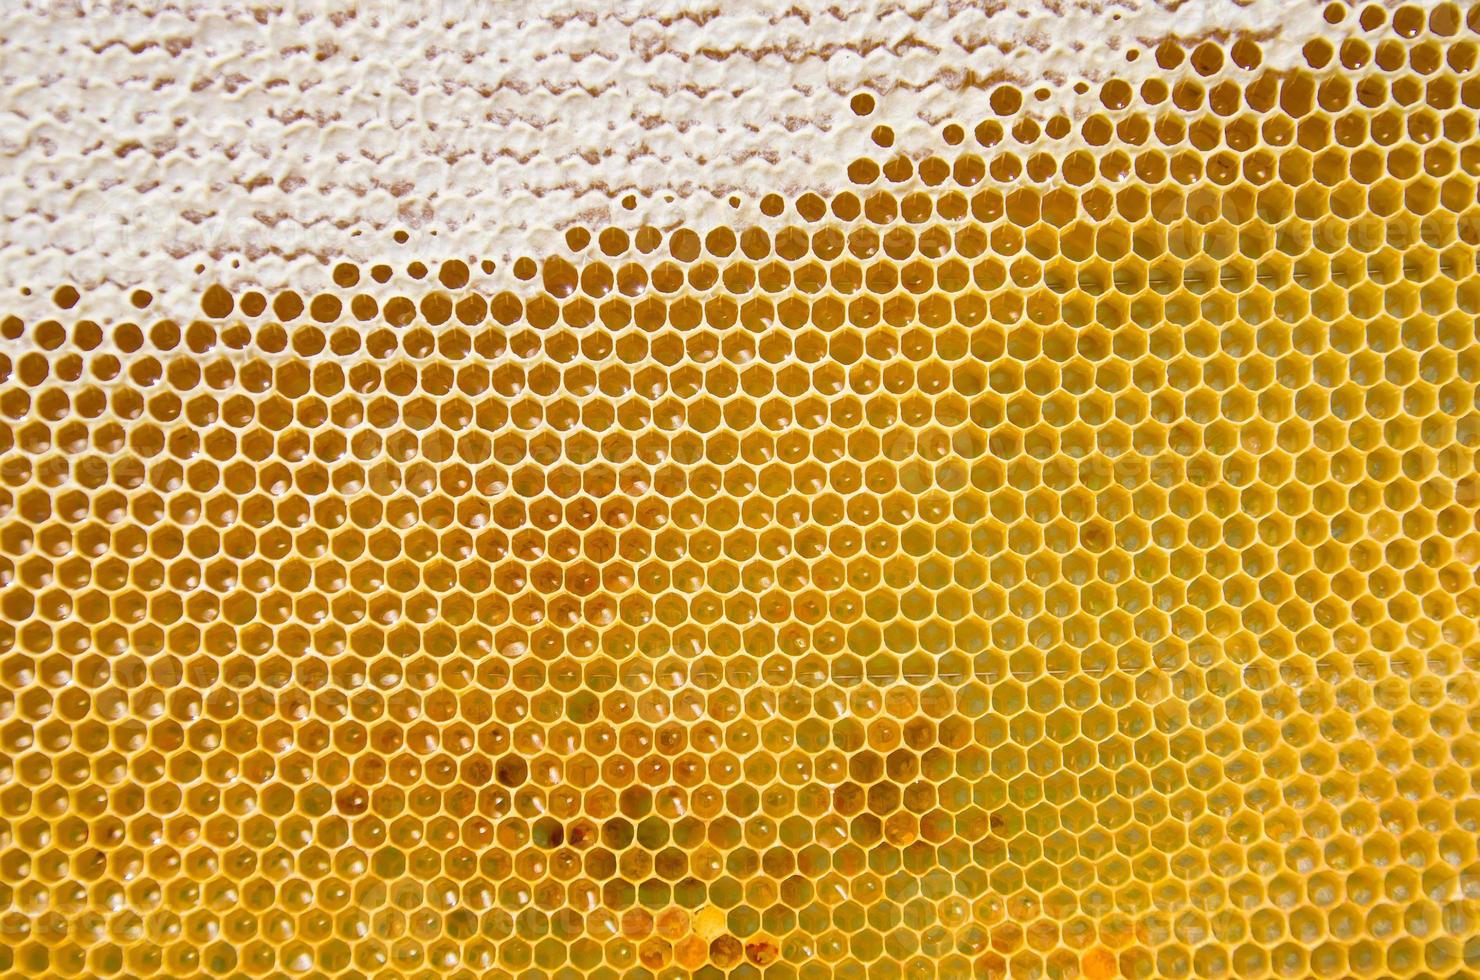 Honeycomb with fresh honey photo